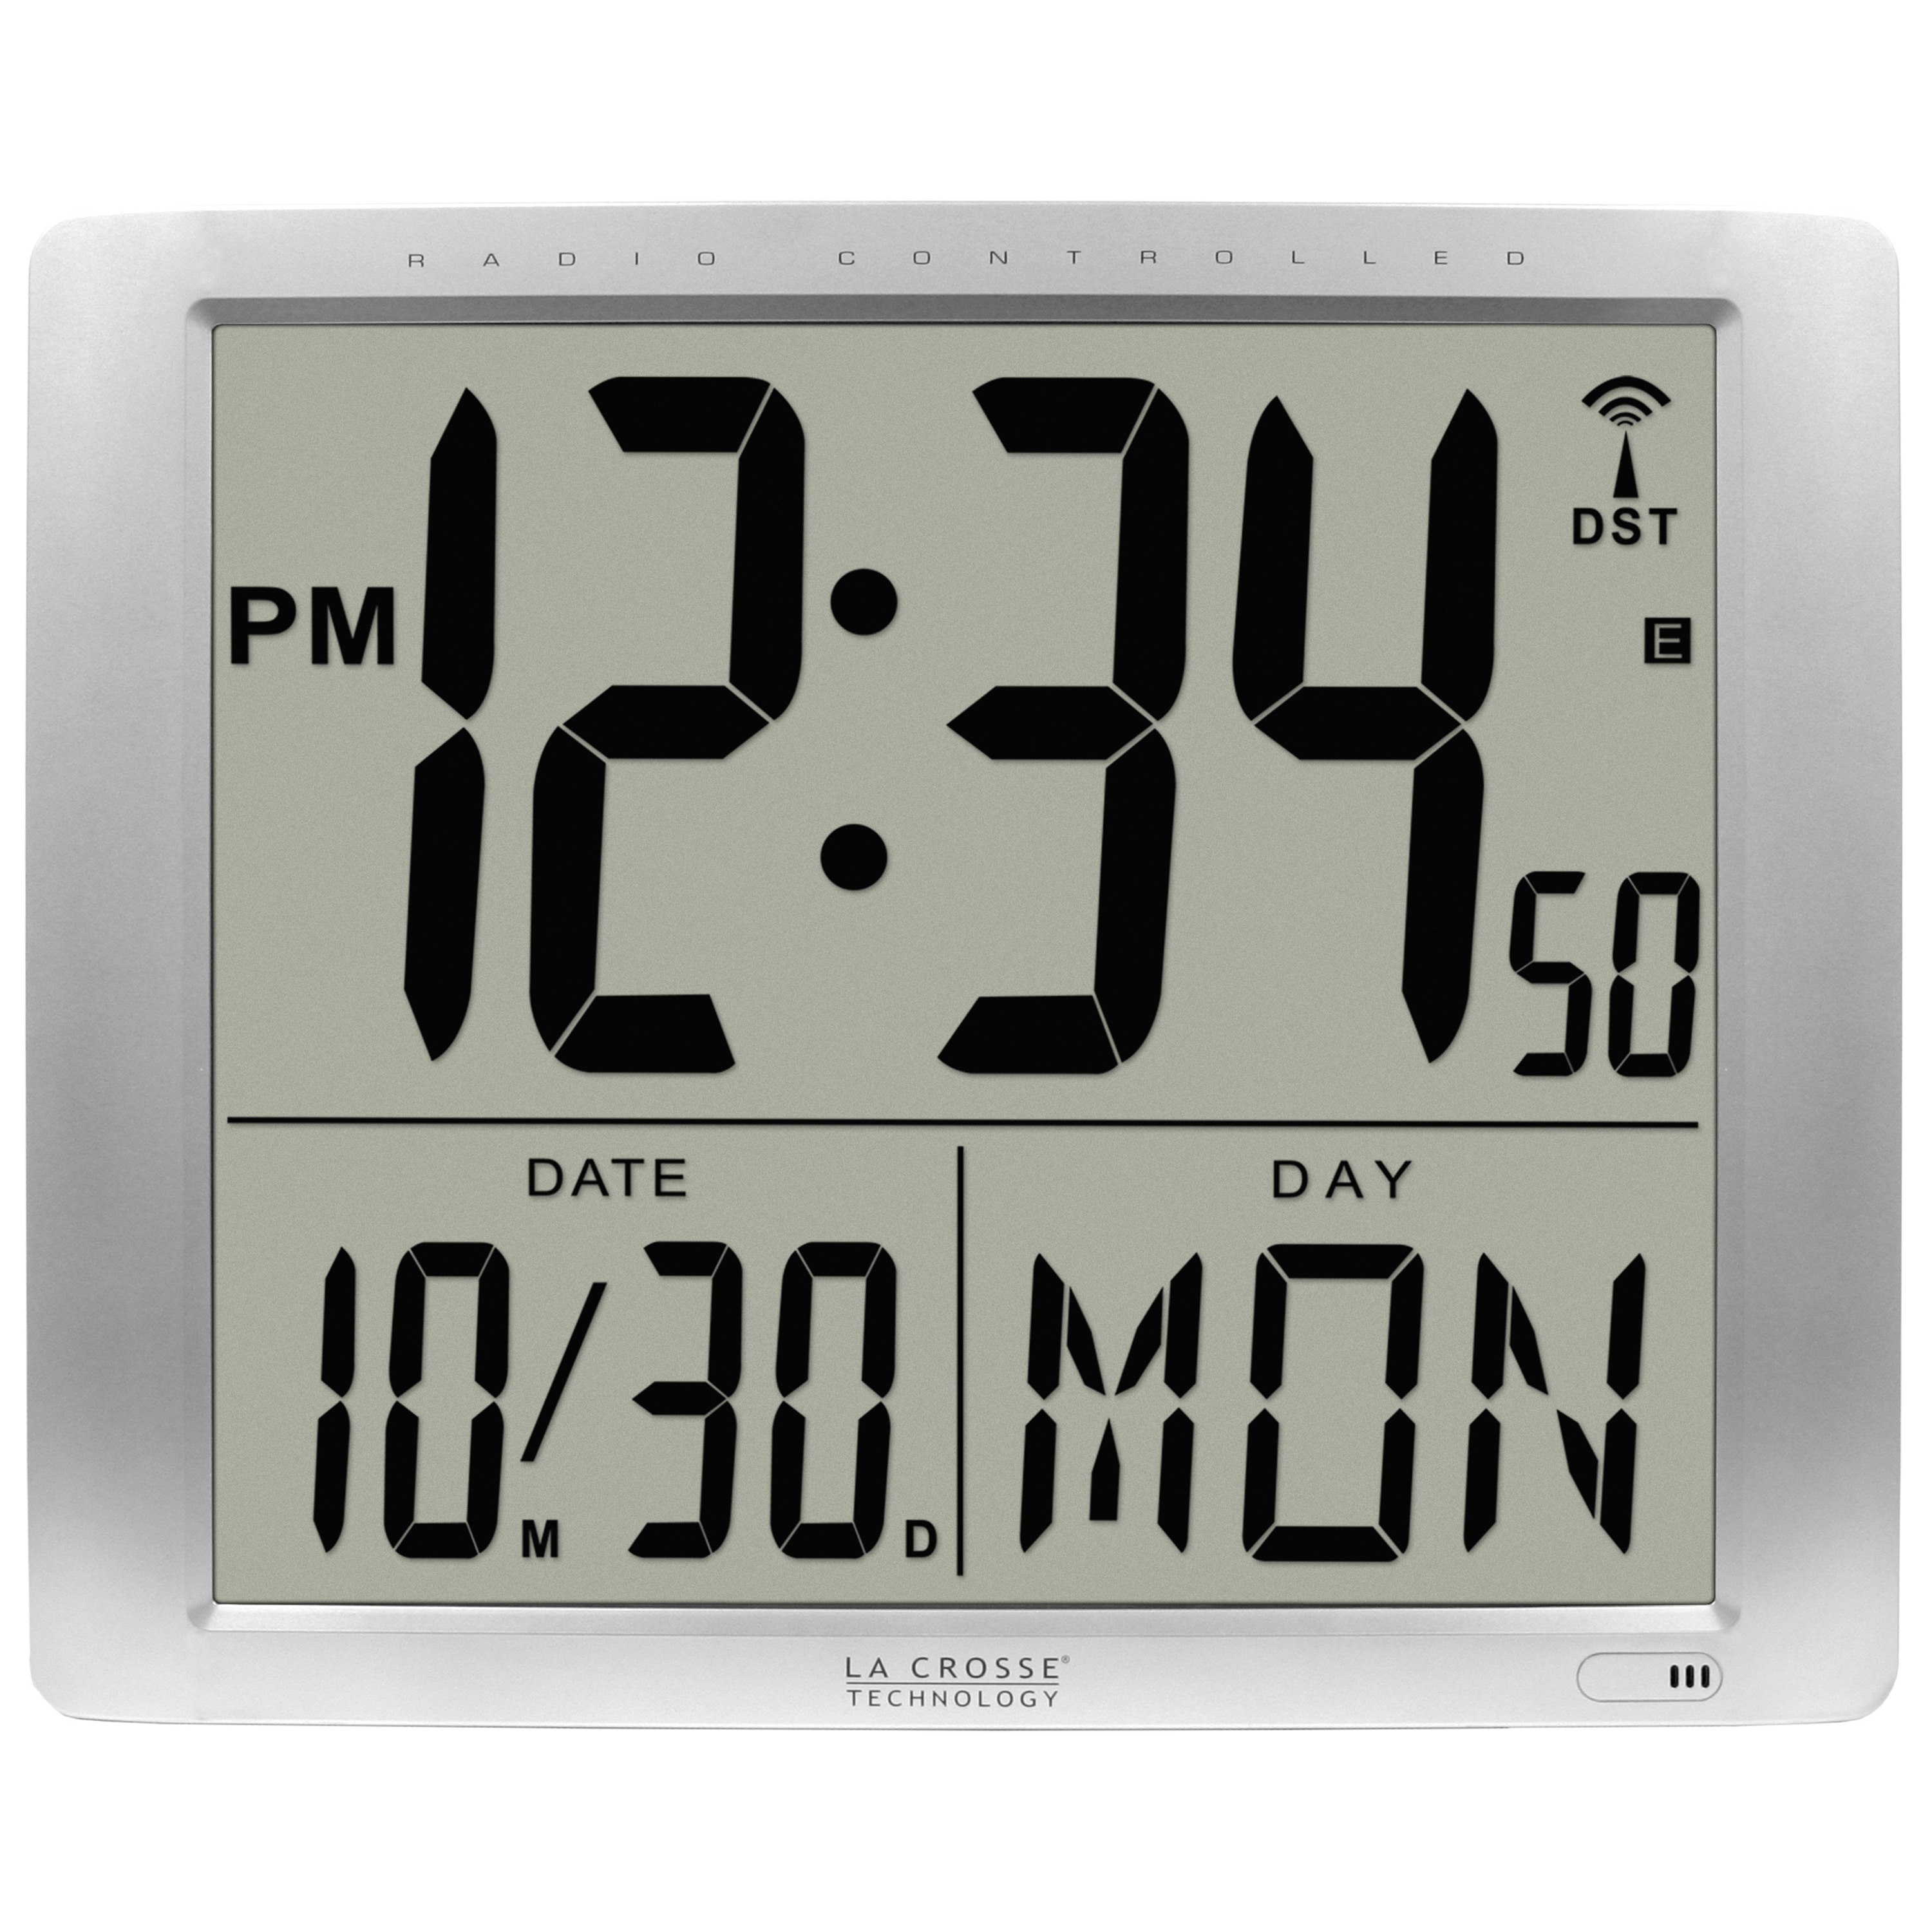 digital clocks time